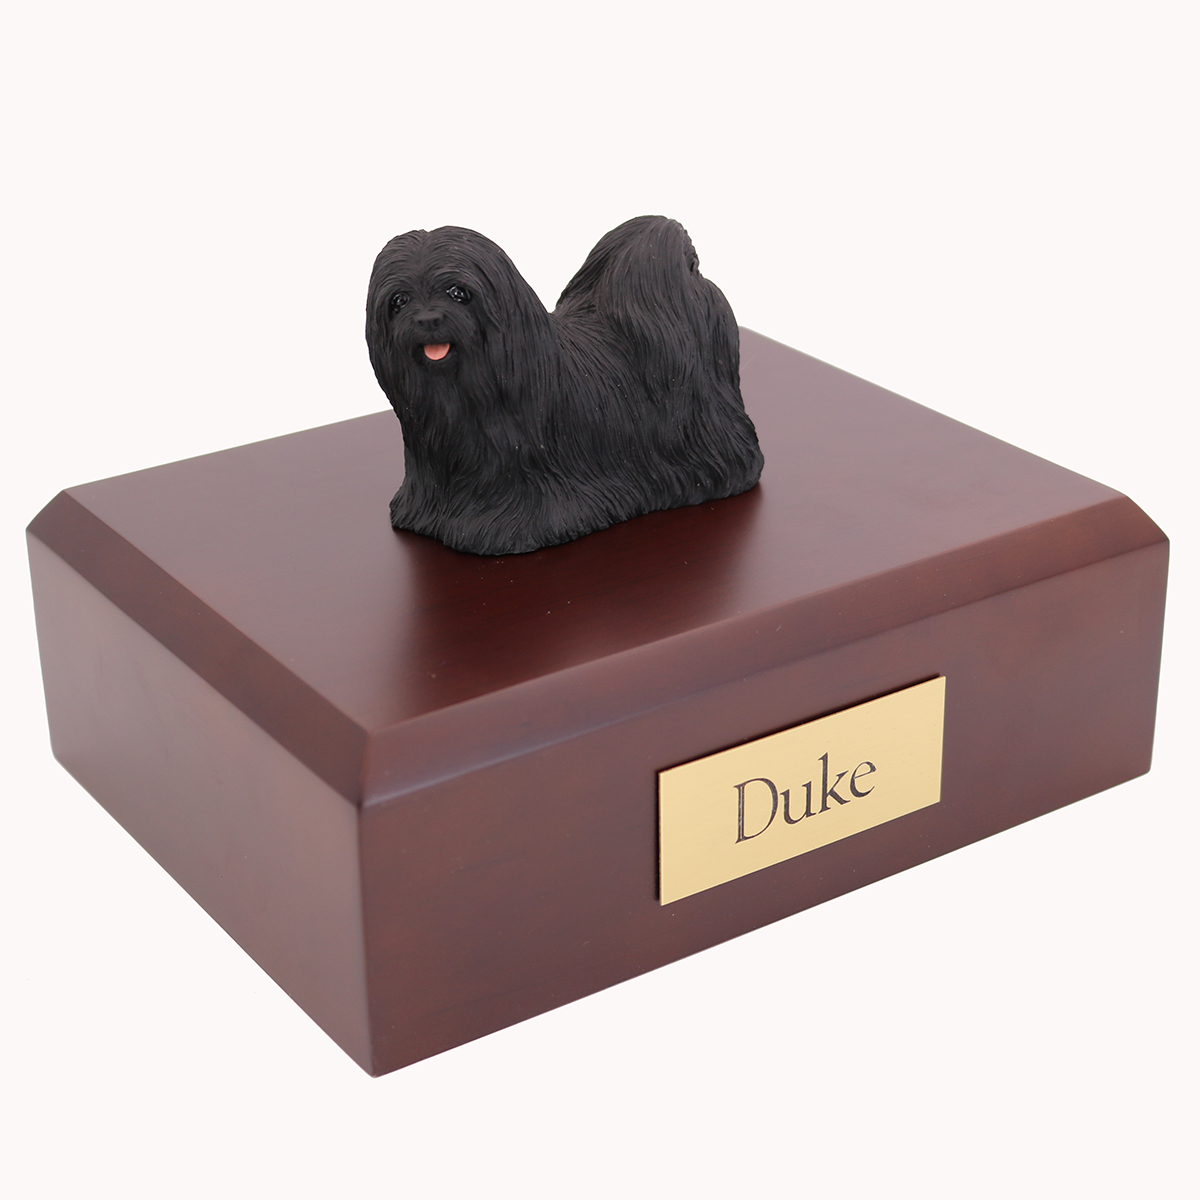 Dog, Lhasa Apso, Black - Figurine Urn